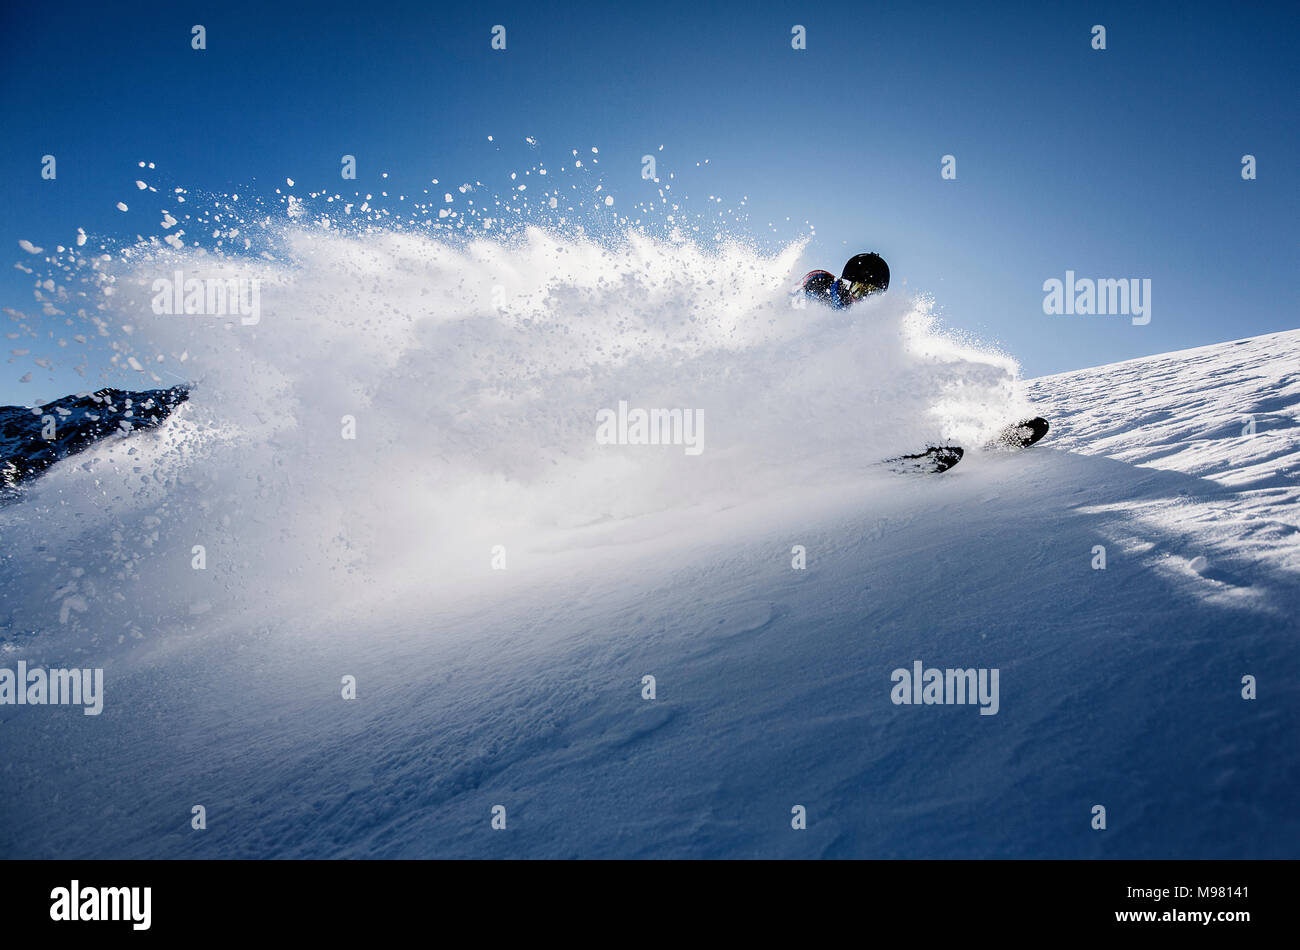 Austria, Tyrol, Mutters, skier on a freeride in powder snow Stock Photo